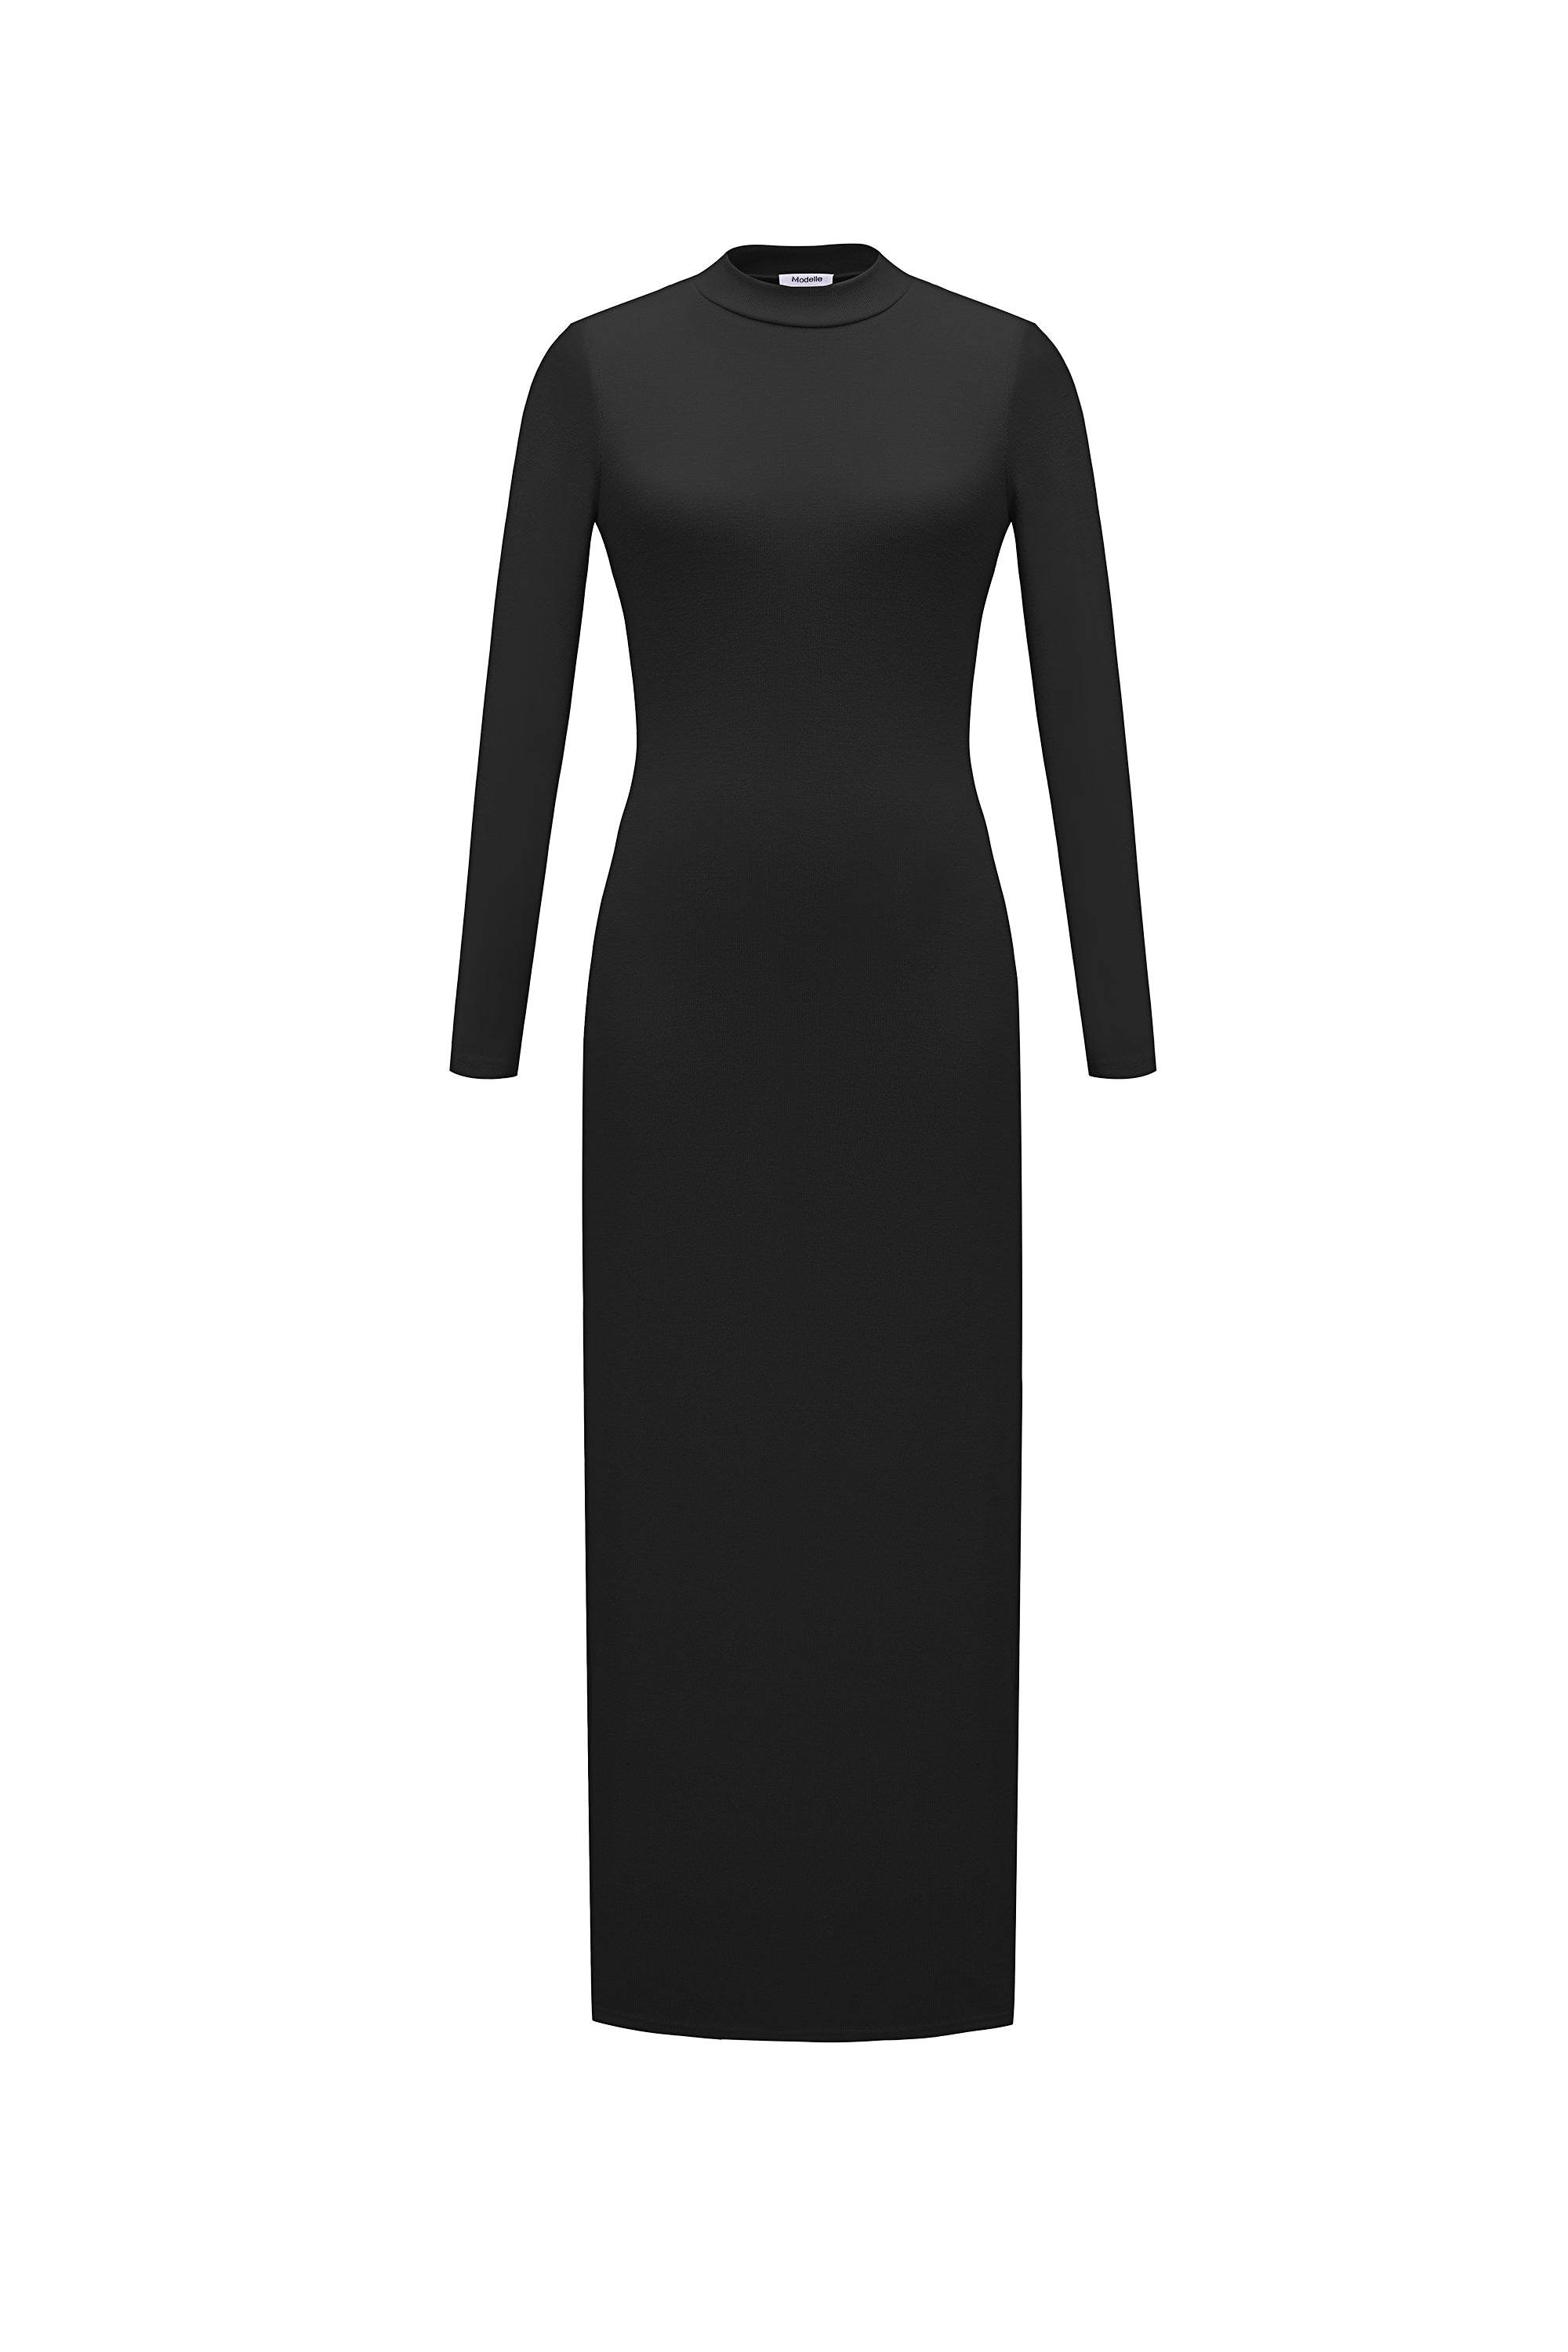 MDL00168Black-dress-abaya